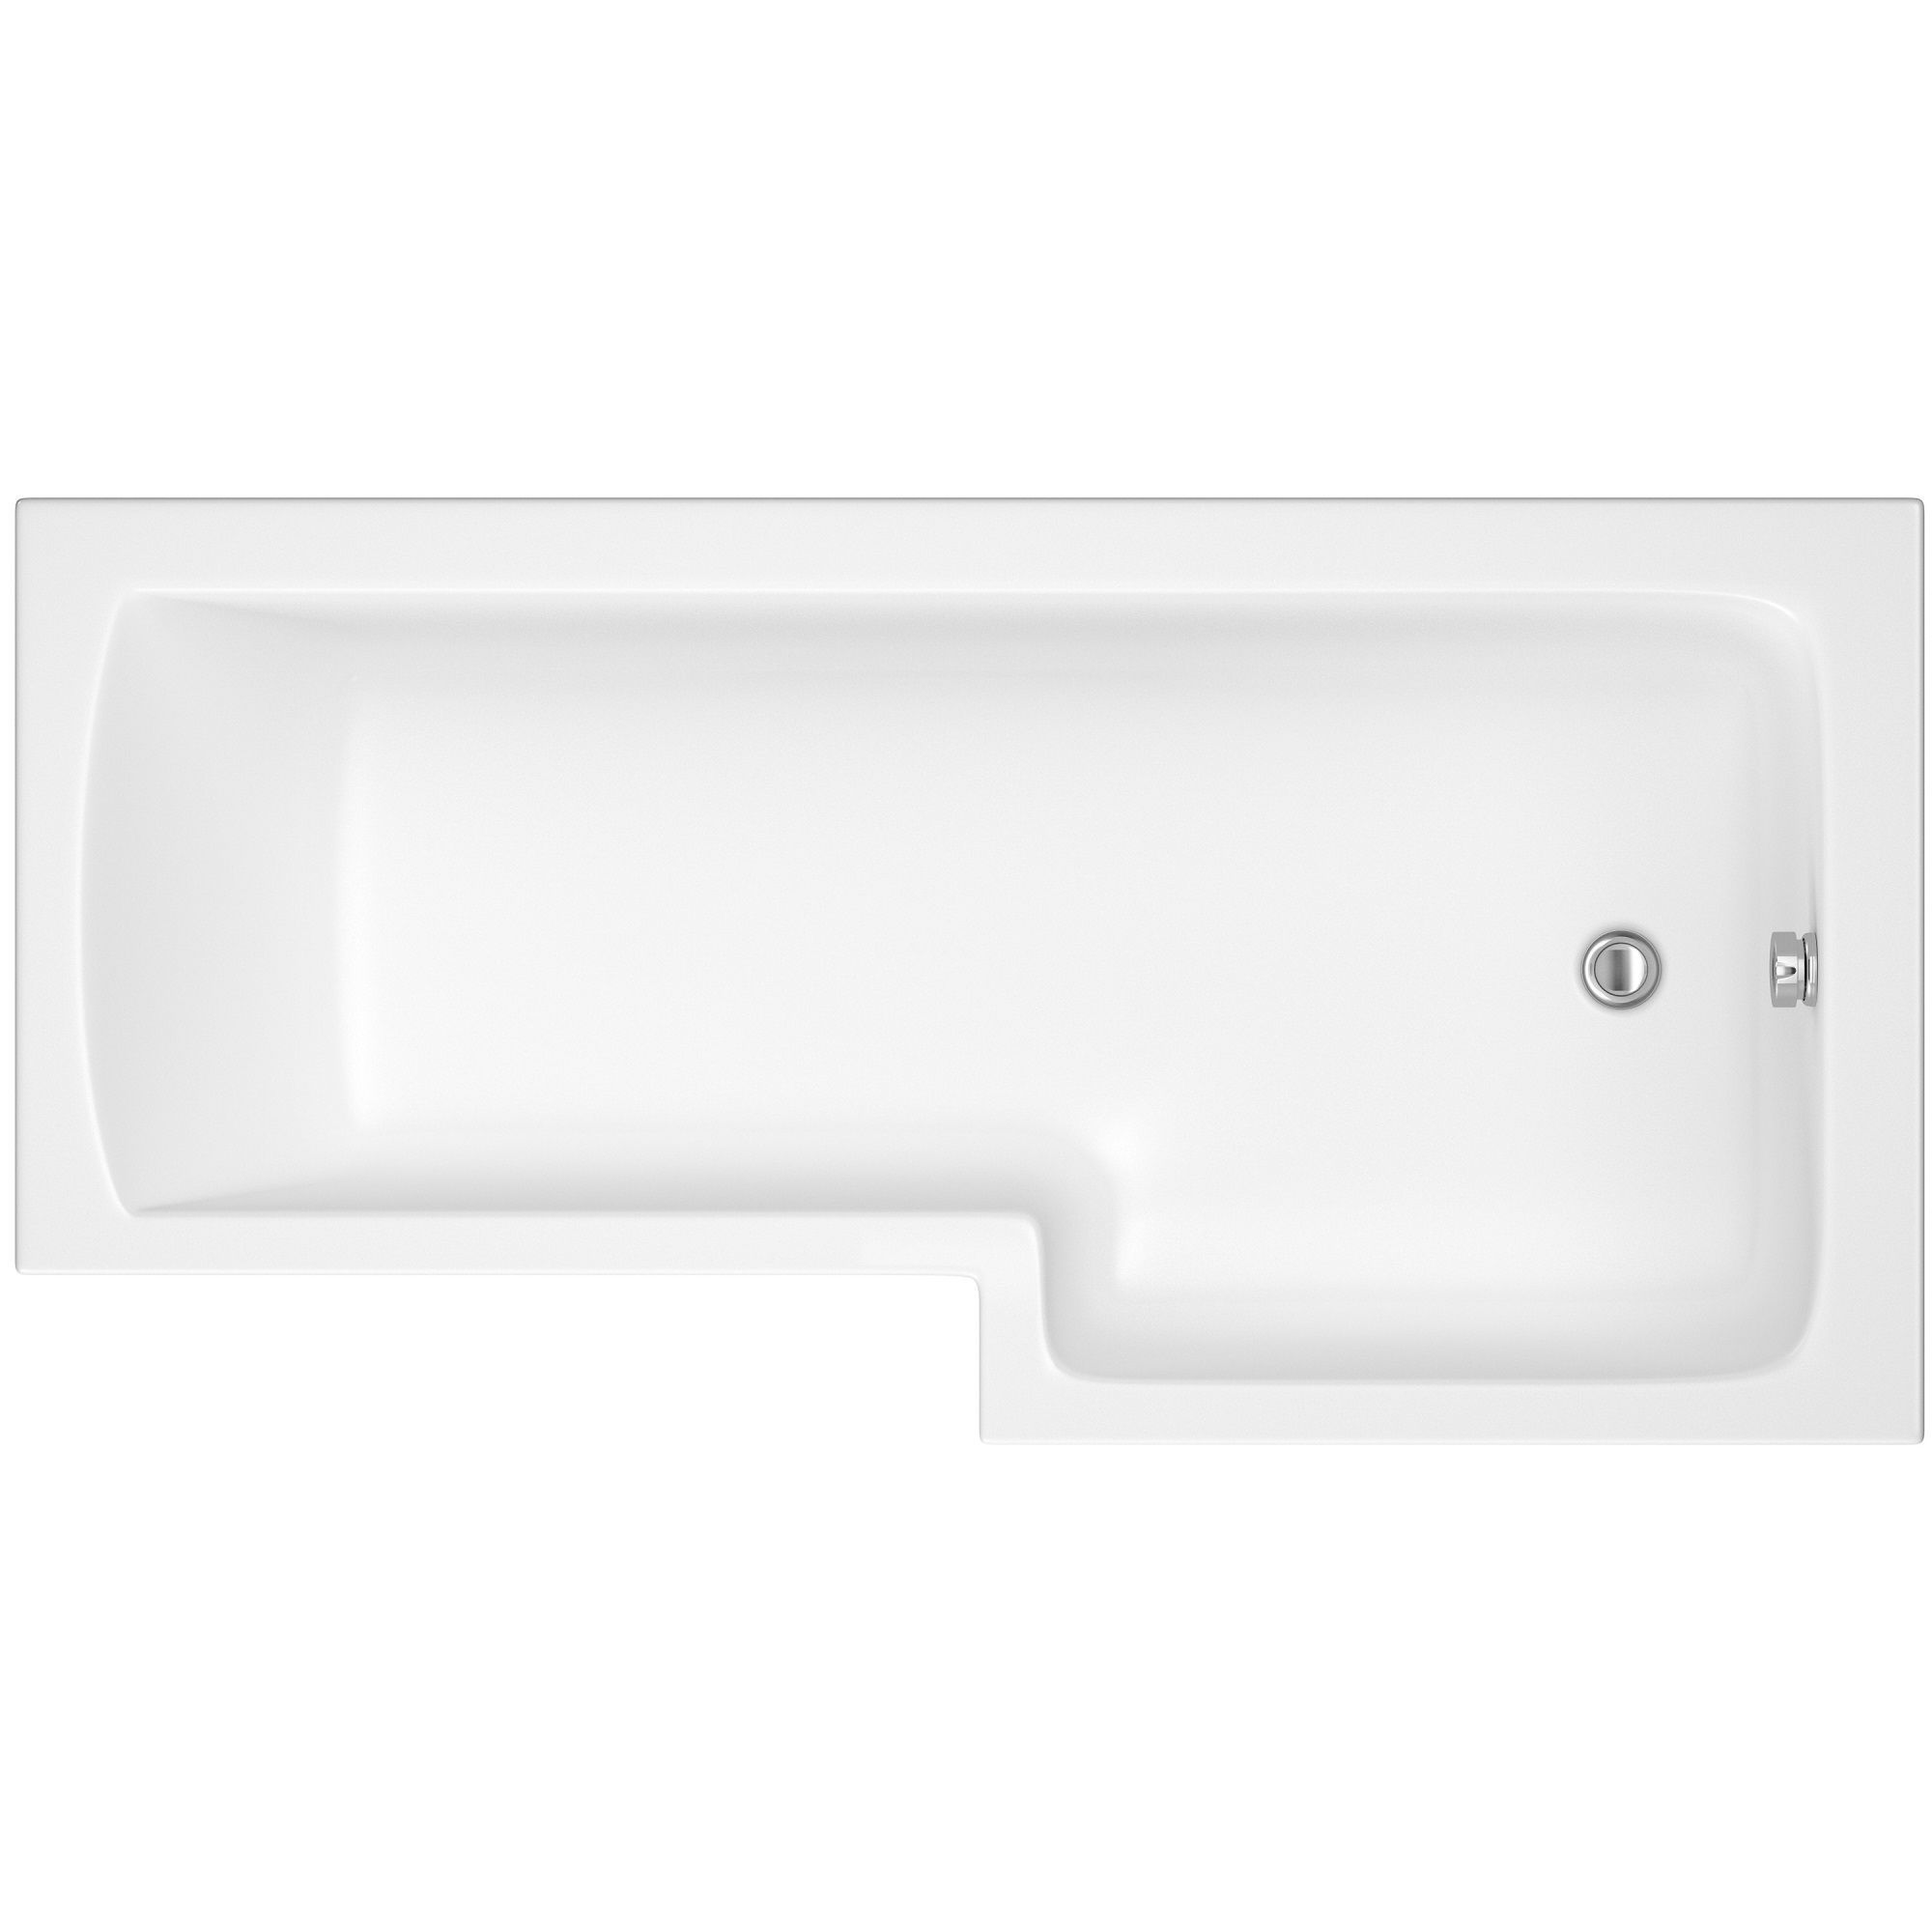 Cooke & Lewis Solarna White L-shaped Shower Bath, panel & screen set